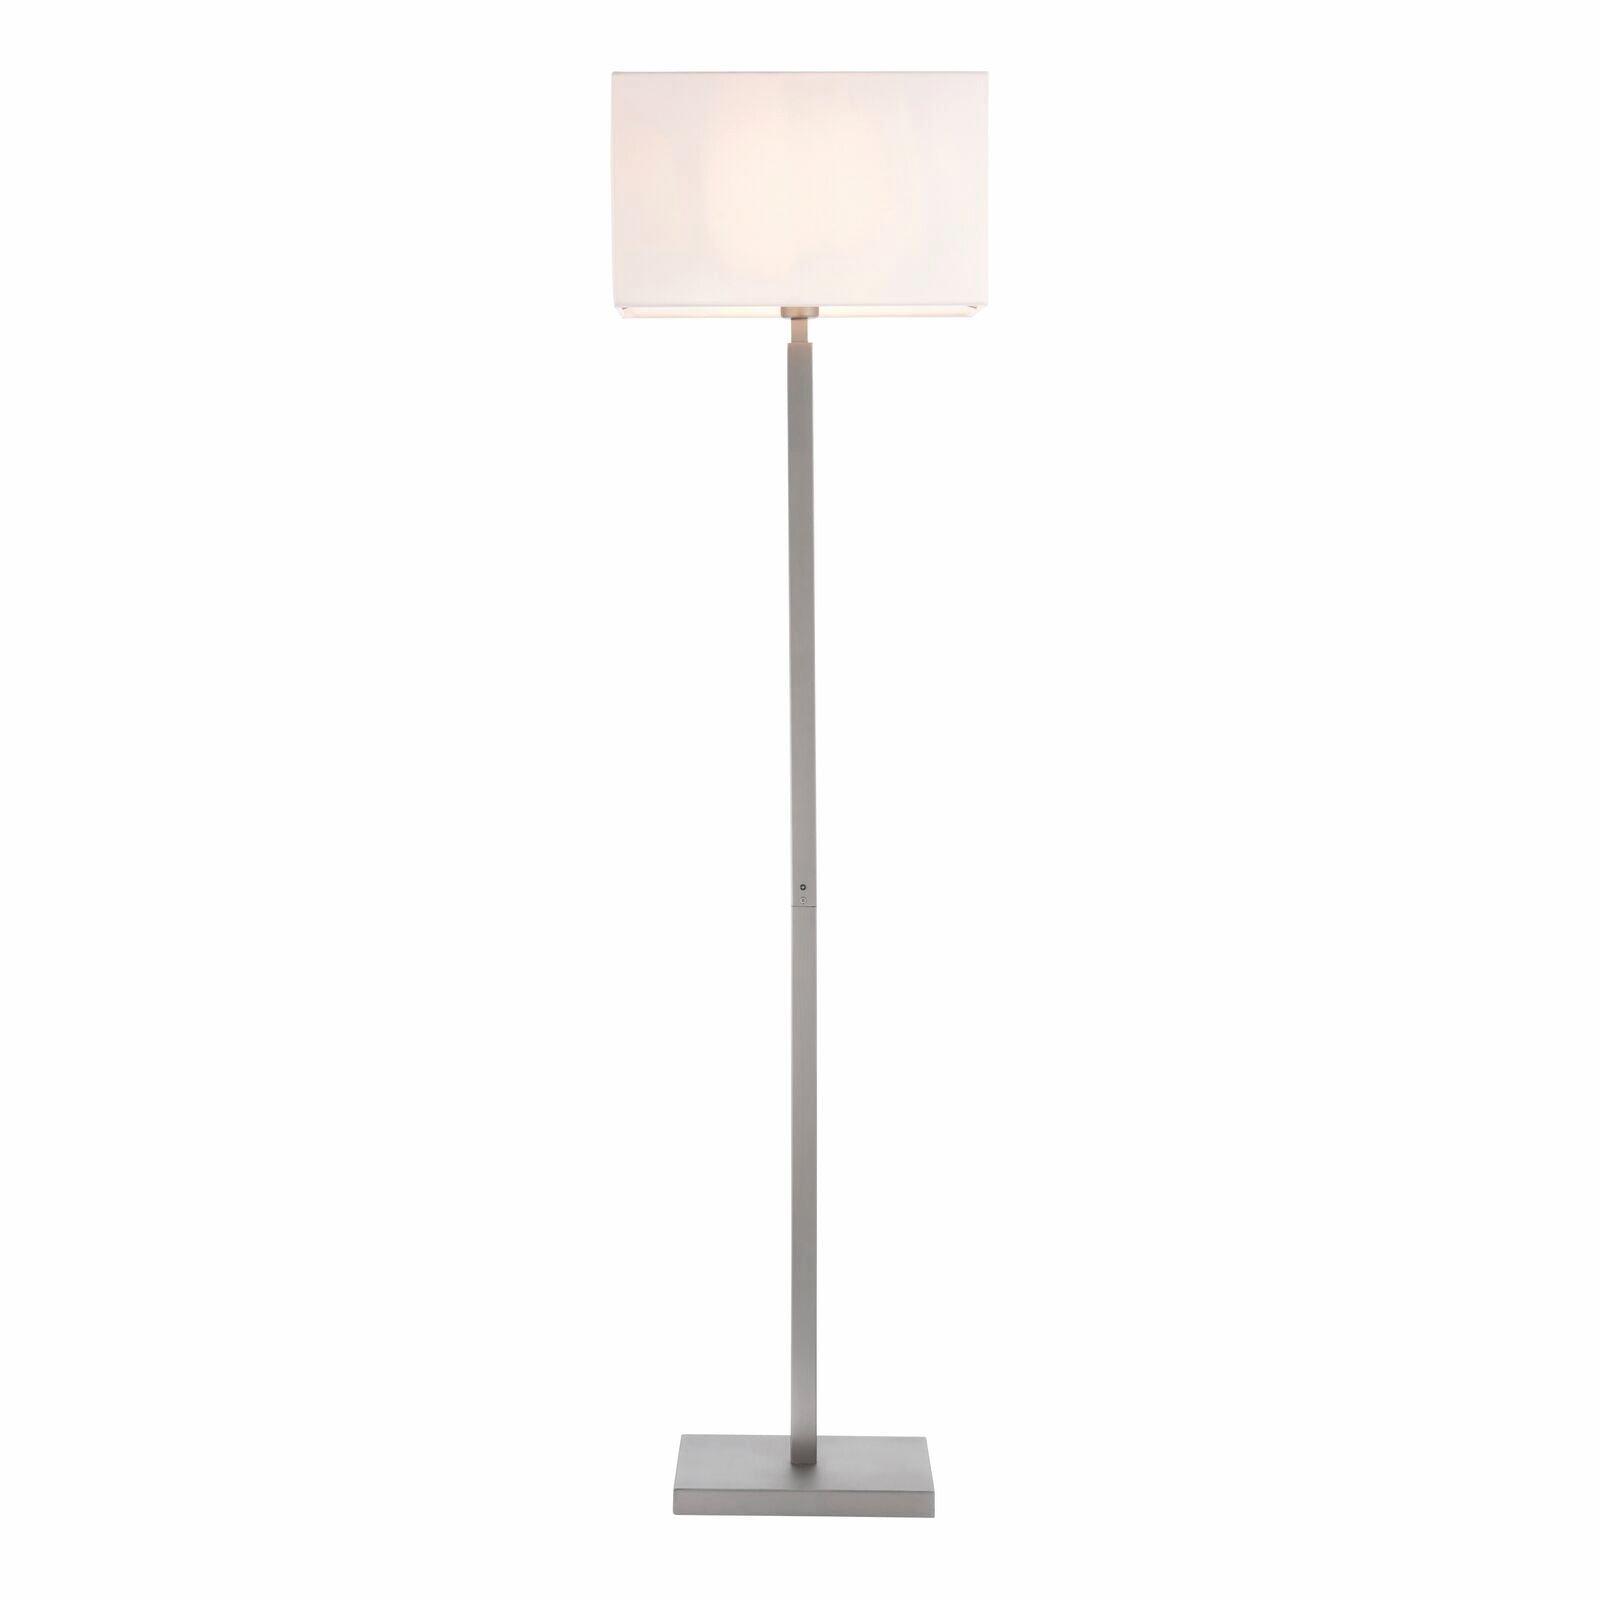 Floor Lamp Light Matt Nickel & Vintage White Fabric 60W E27 Base & Shade